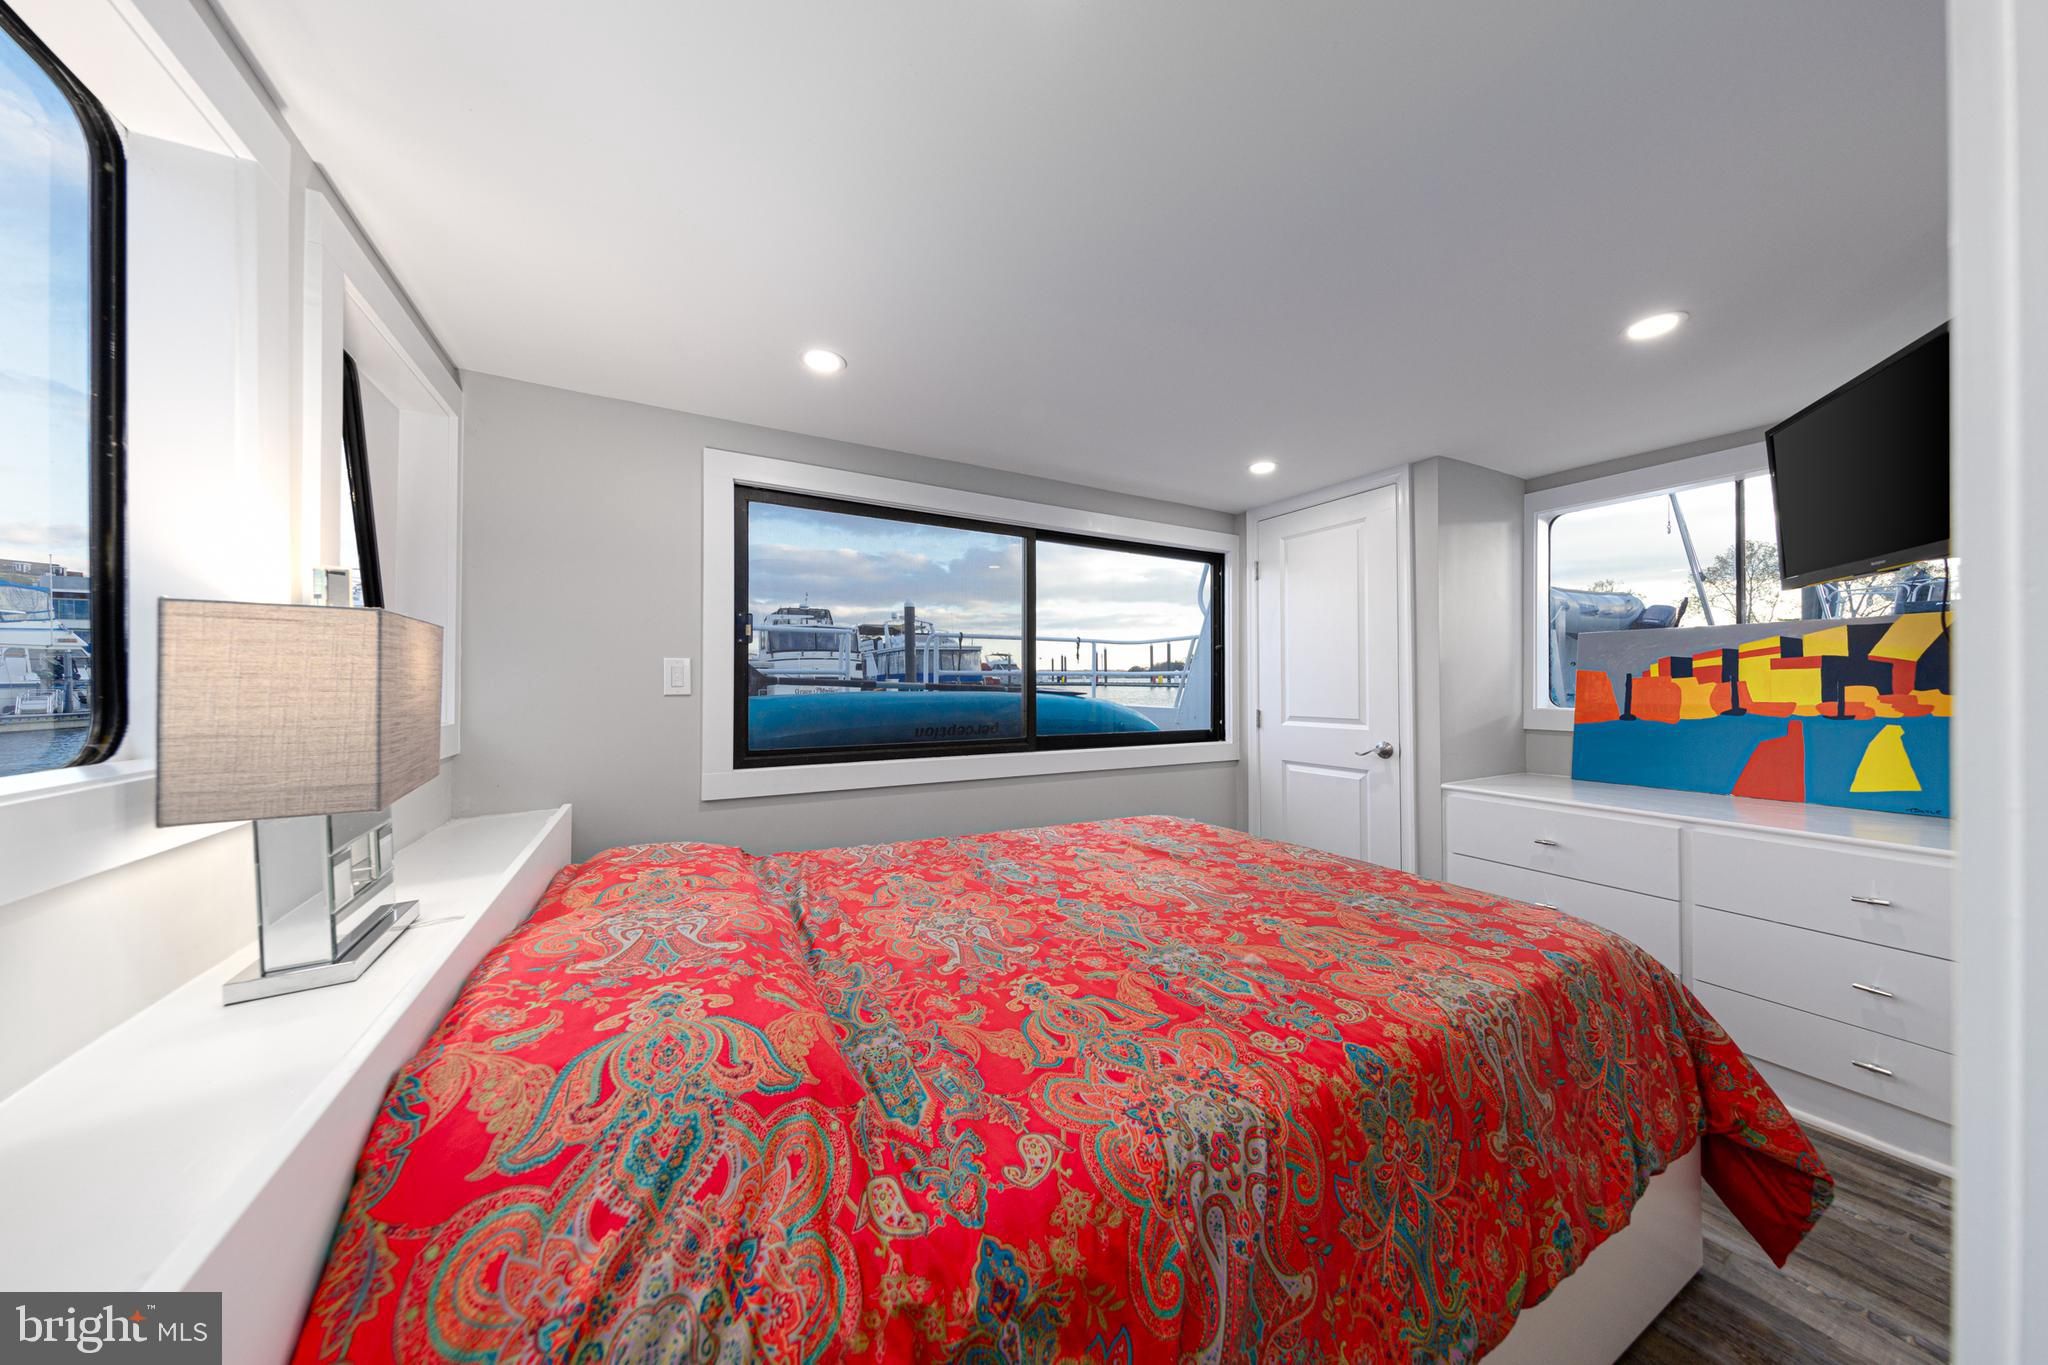 The houseboat's bedroom.